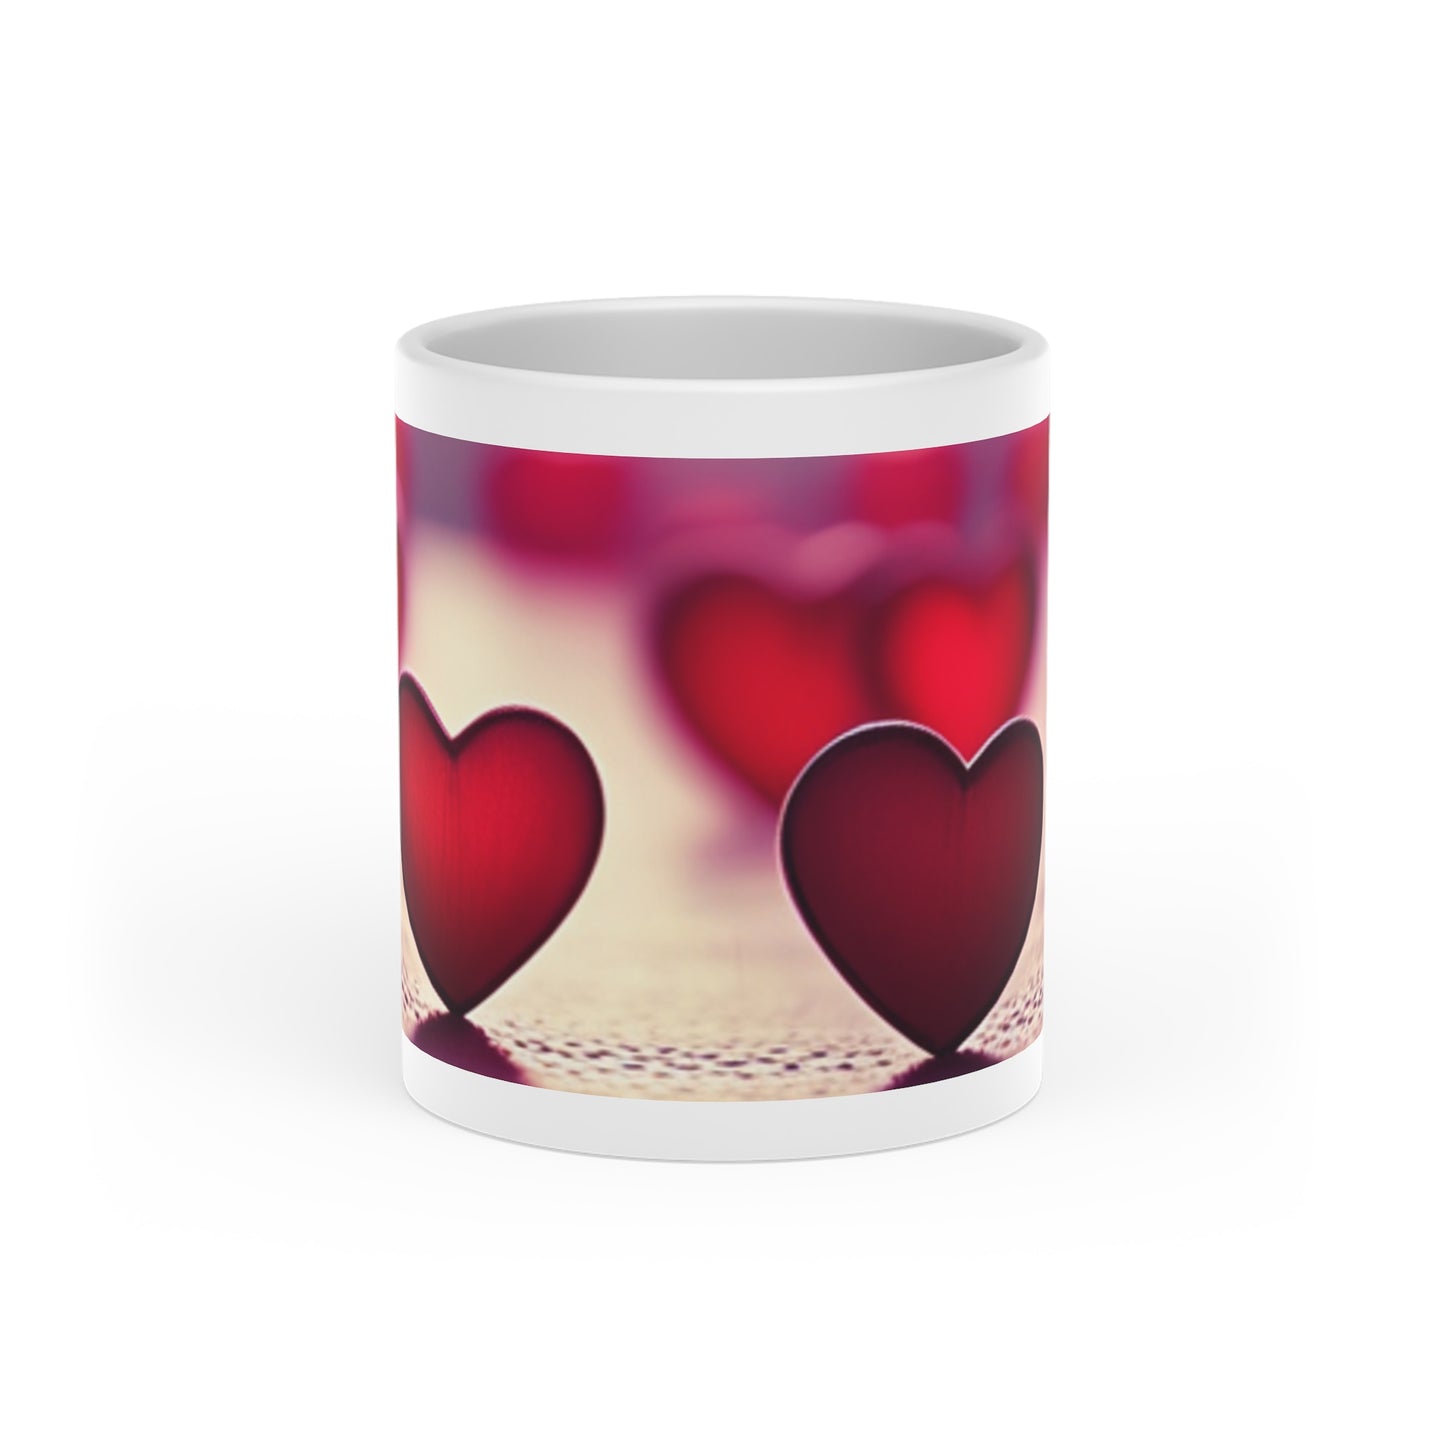 Hearts in a Row Heart-Shaped Mug, Duraglaze Gloss Coating, 11 oz Mug